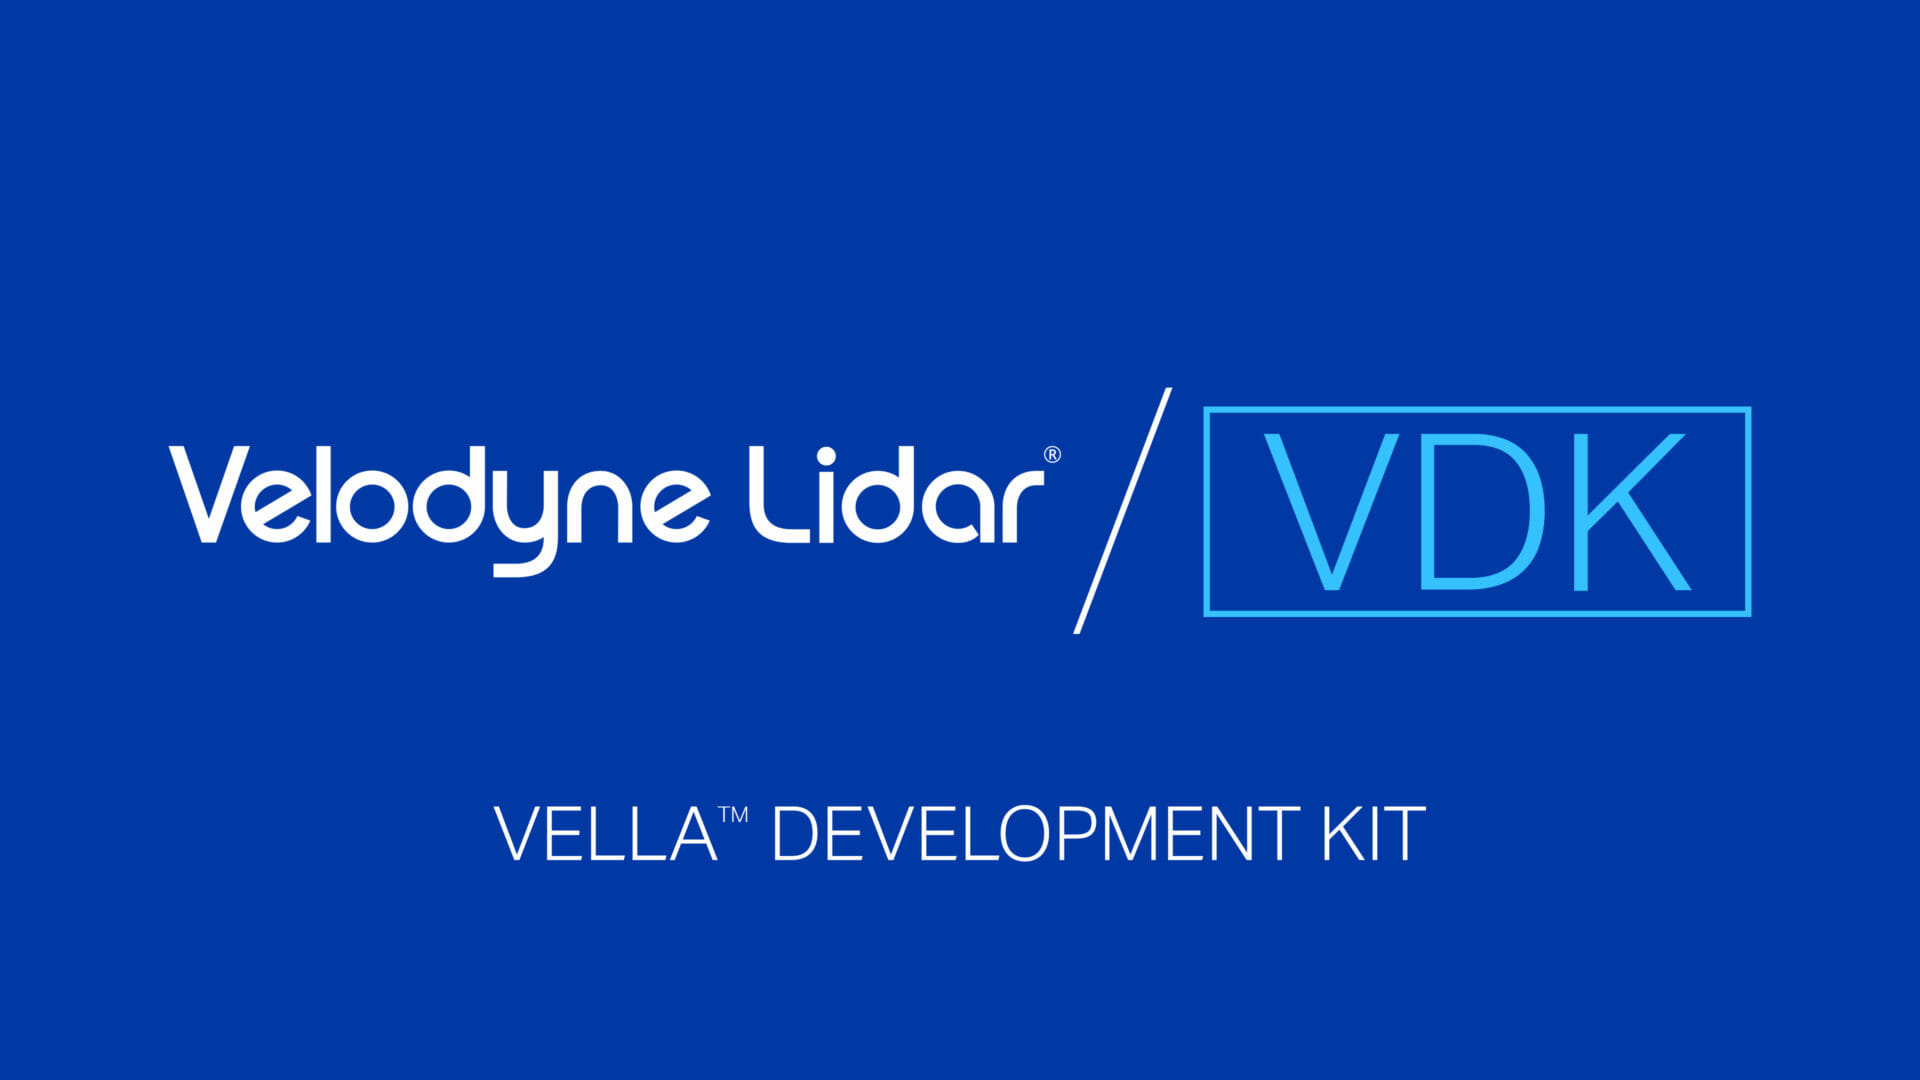 https://velodynelidar.com/wp-content/uploads/2021/07/VelodyneLidar-VellaDevelopmentKit-Software.jpeg